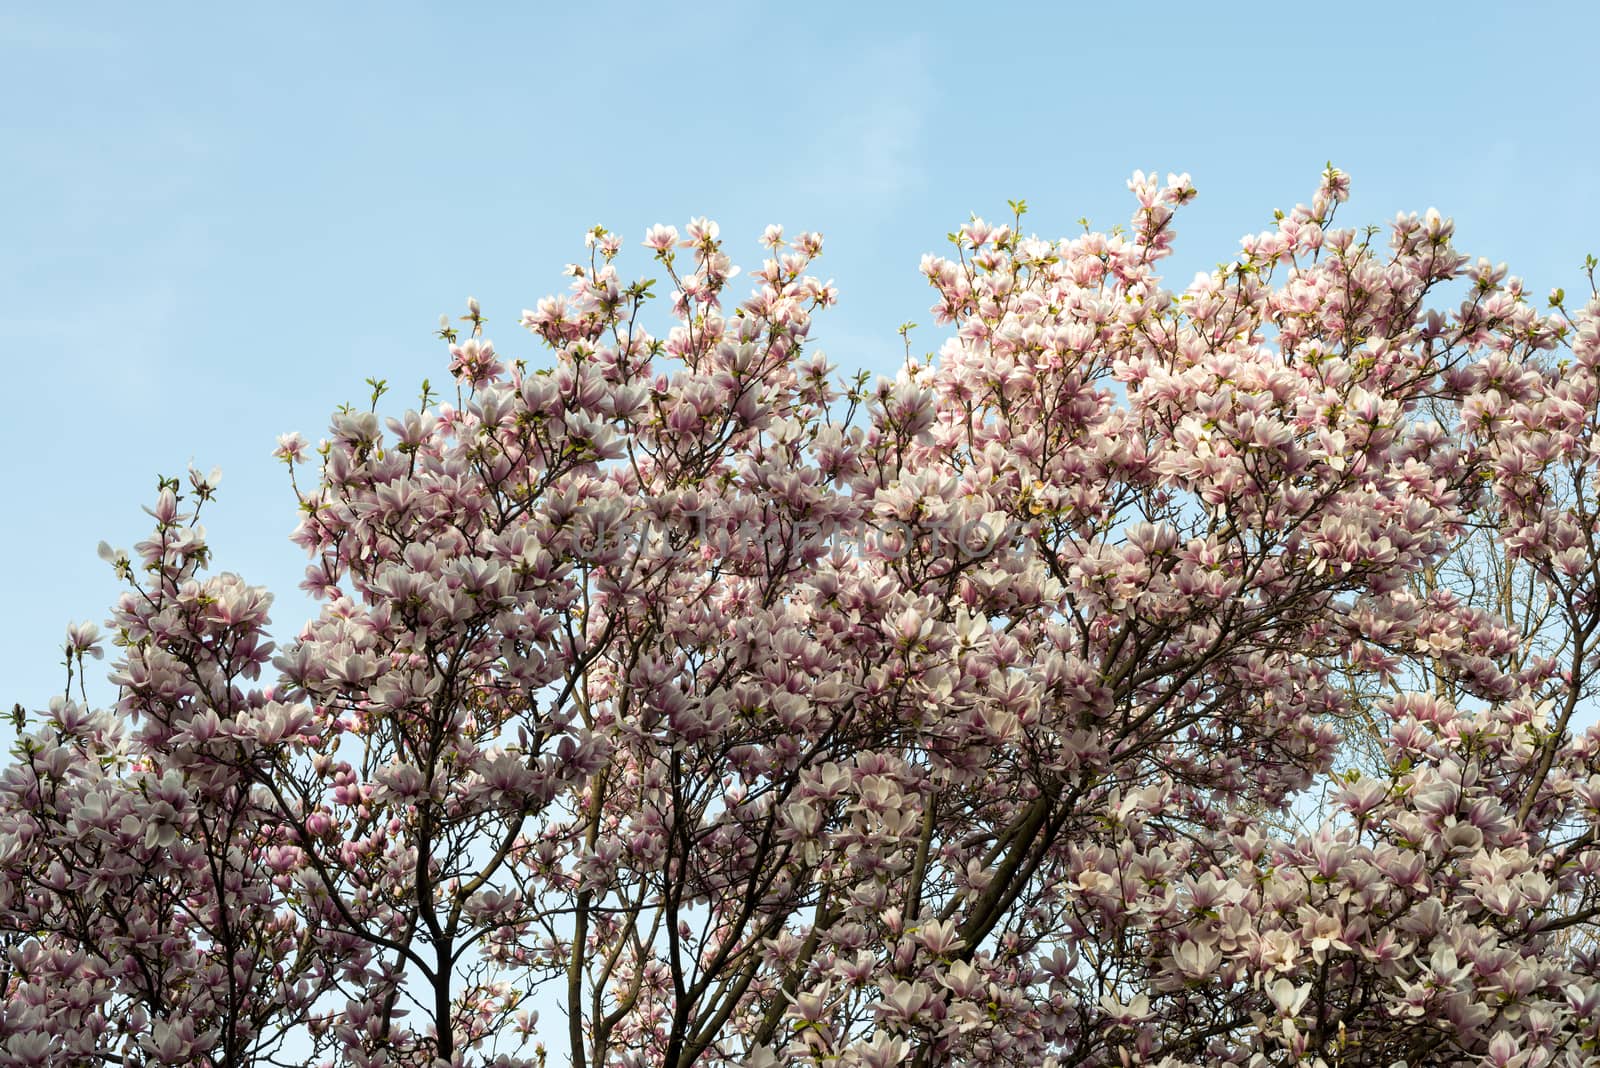 Magnolia blossom tree in spring